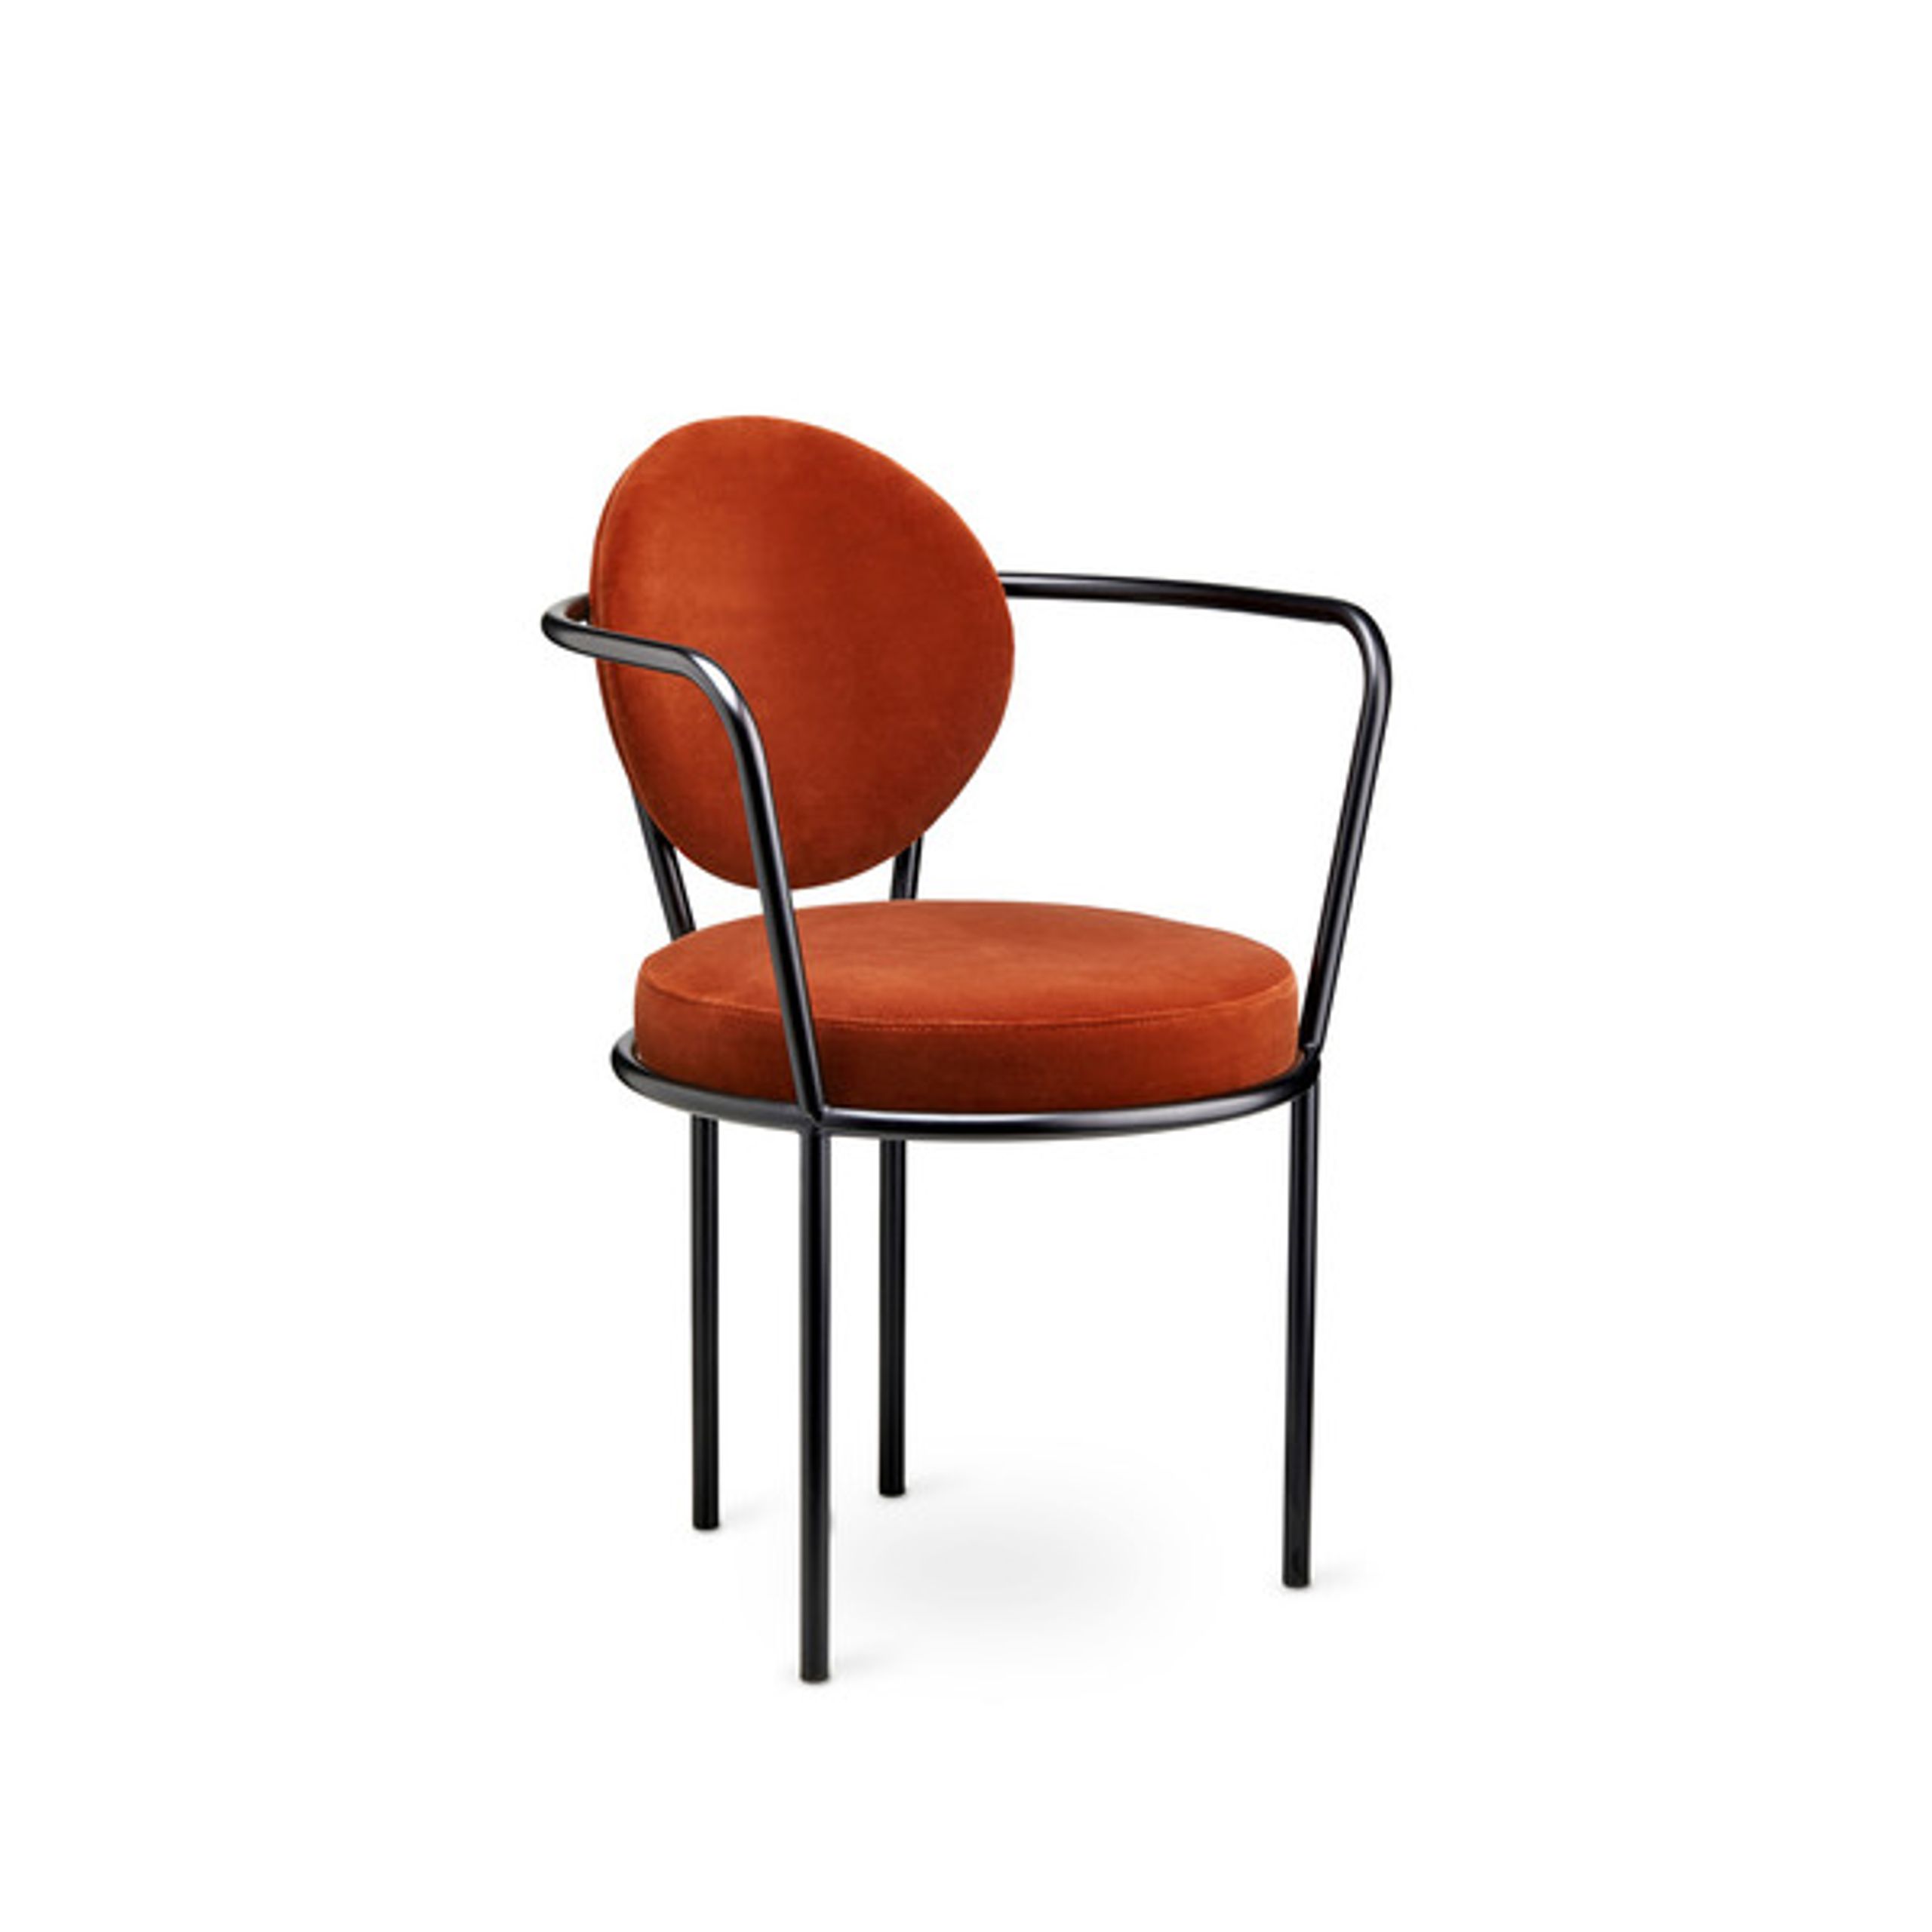 Casablanca chair - - - Design By Us